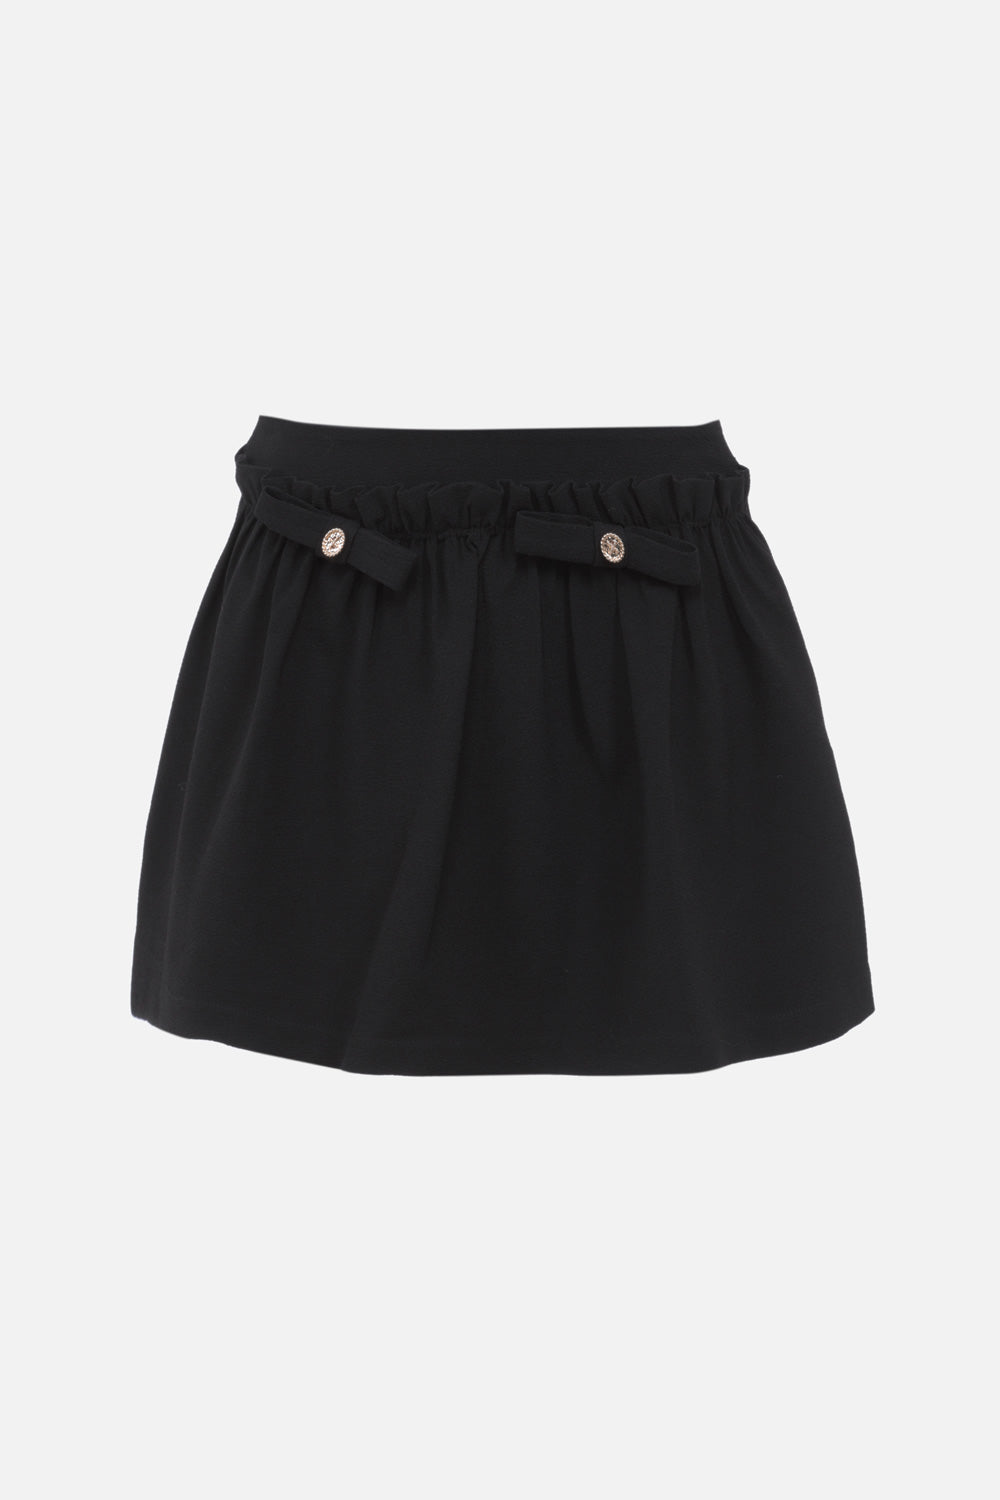 Short black pleated-waist skirt